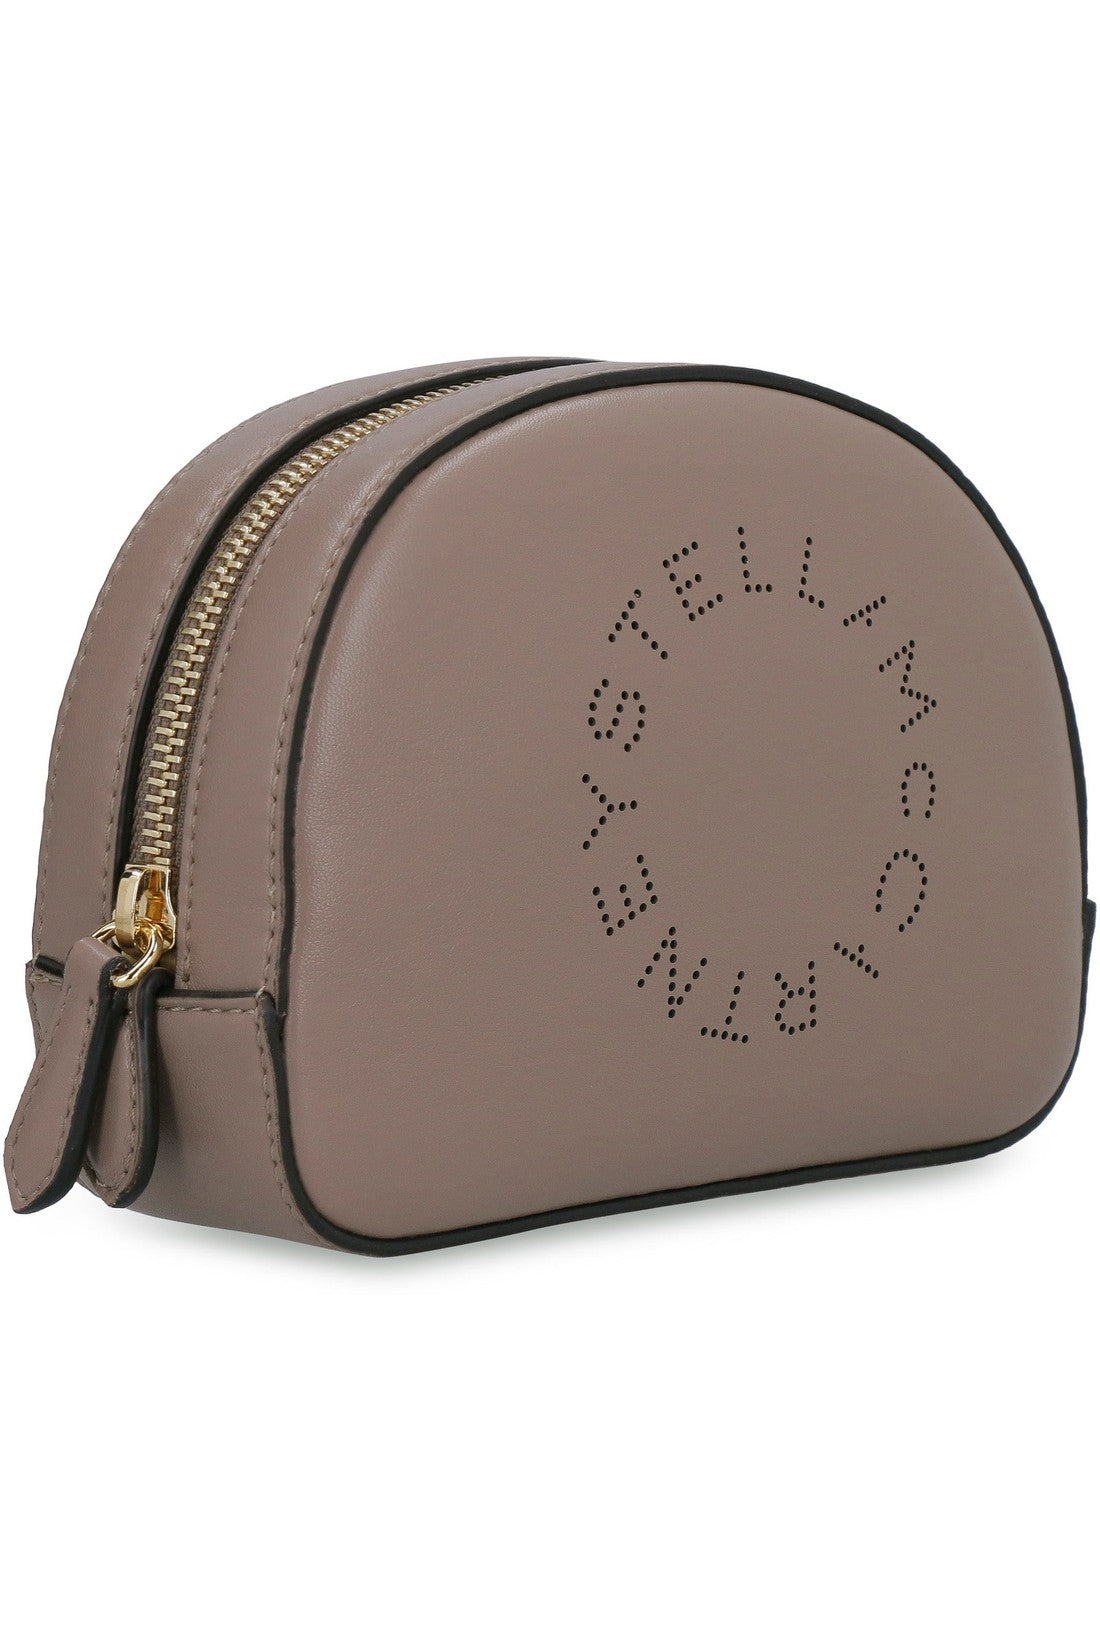 Stella McCartney-OUTLET-SALE-Stella Logo wash bag-ARCHIVIST